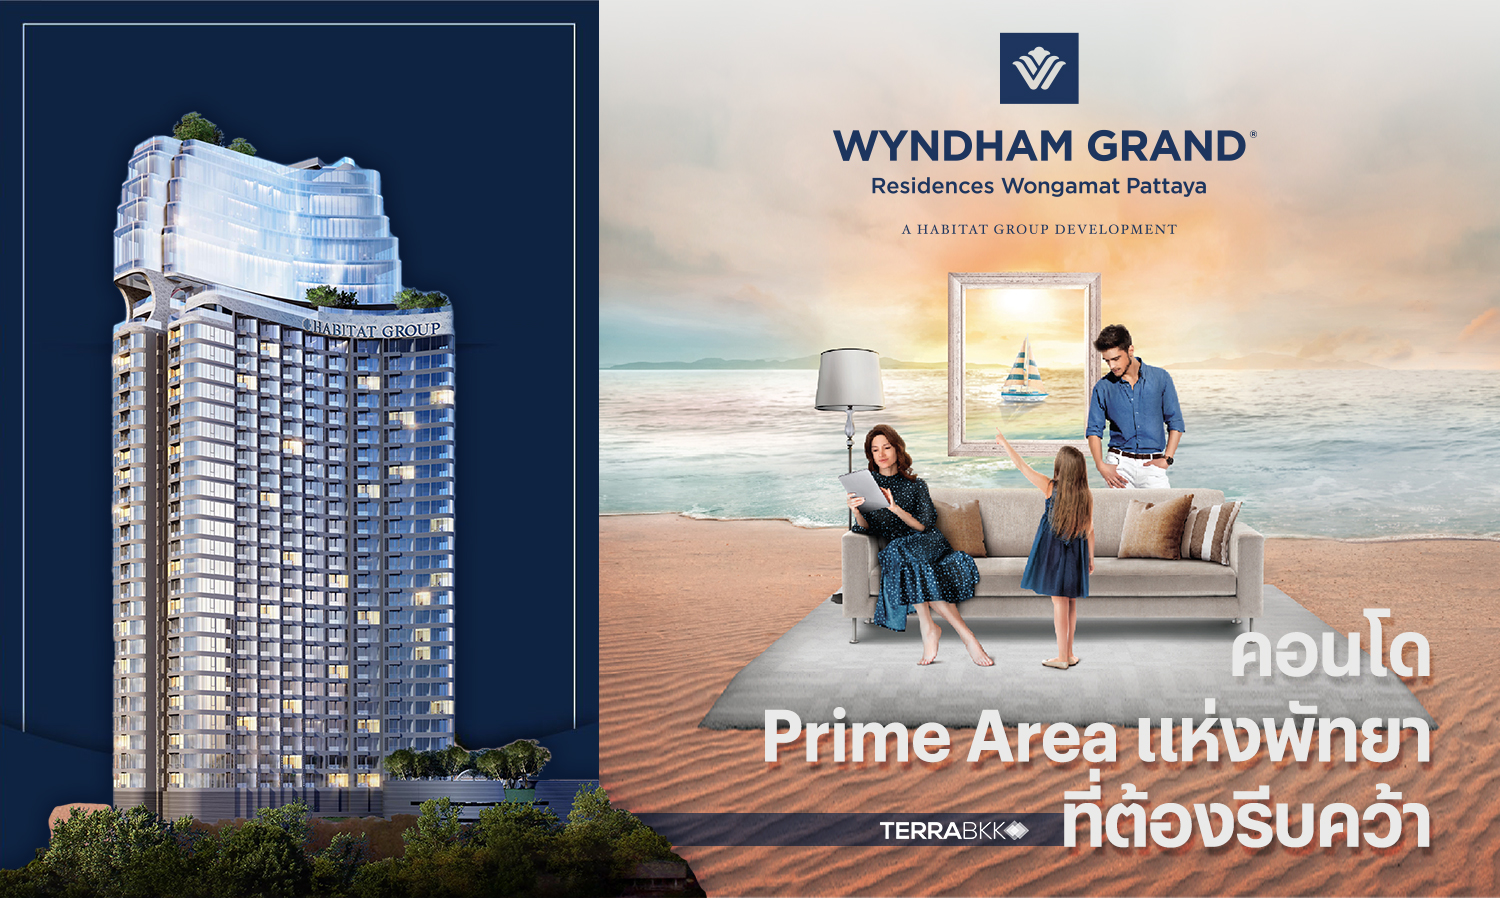 WYNDHAM GRAND Residences Wongamat Pattaya  คอนโด Prime Area แห่งพัทยาที่ต้องรีบคว้า